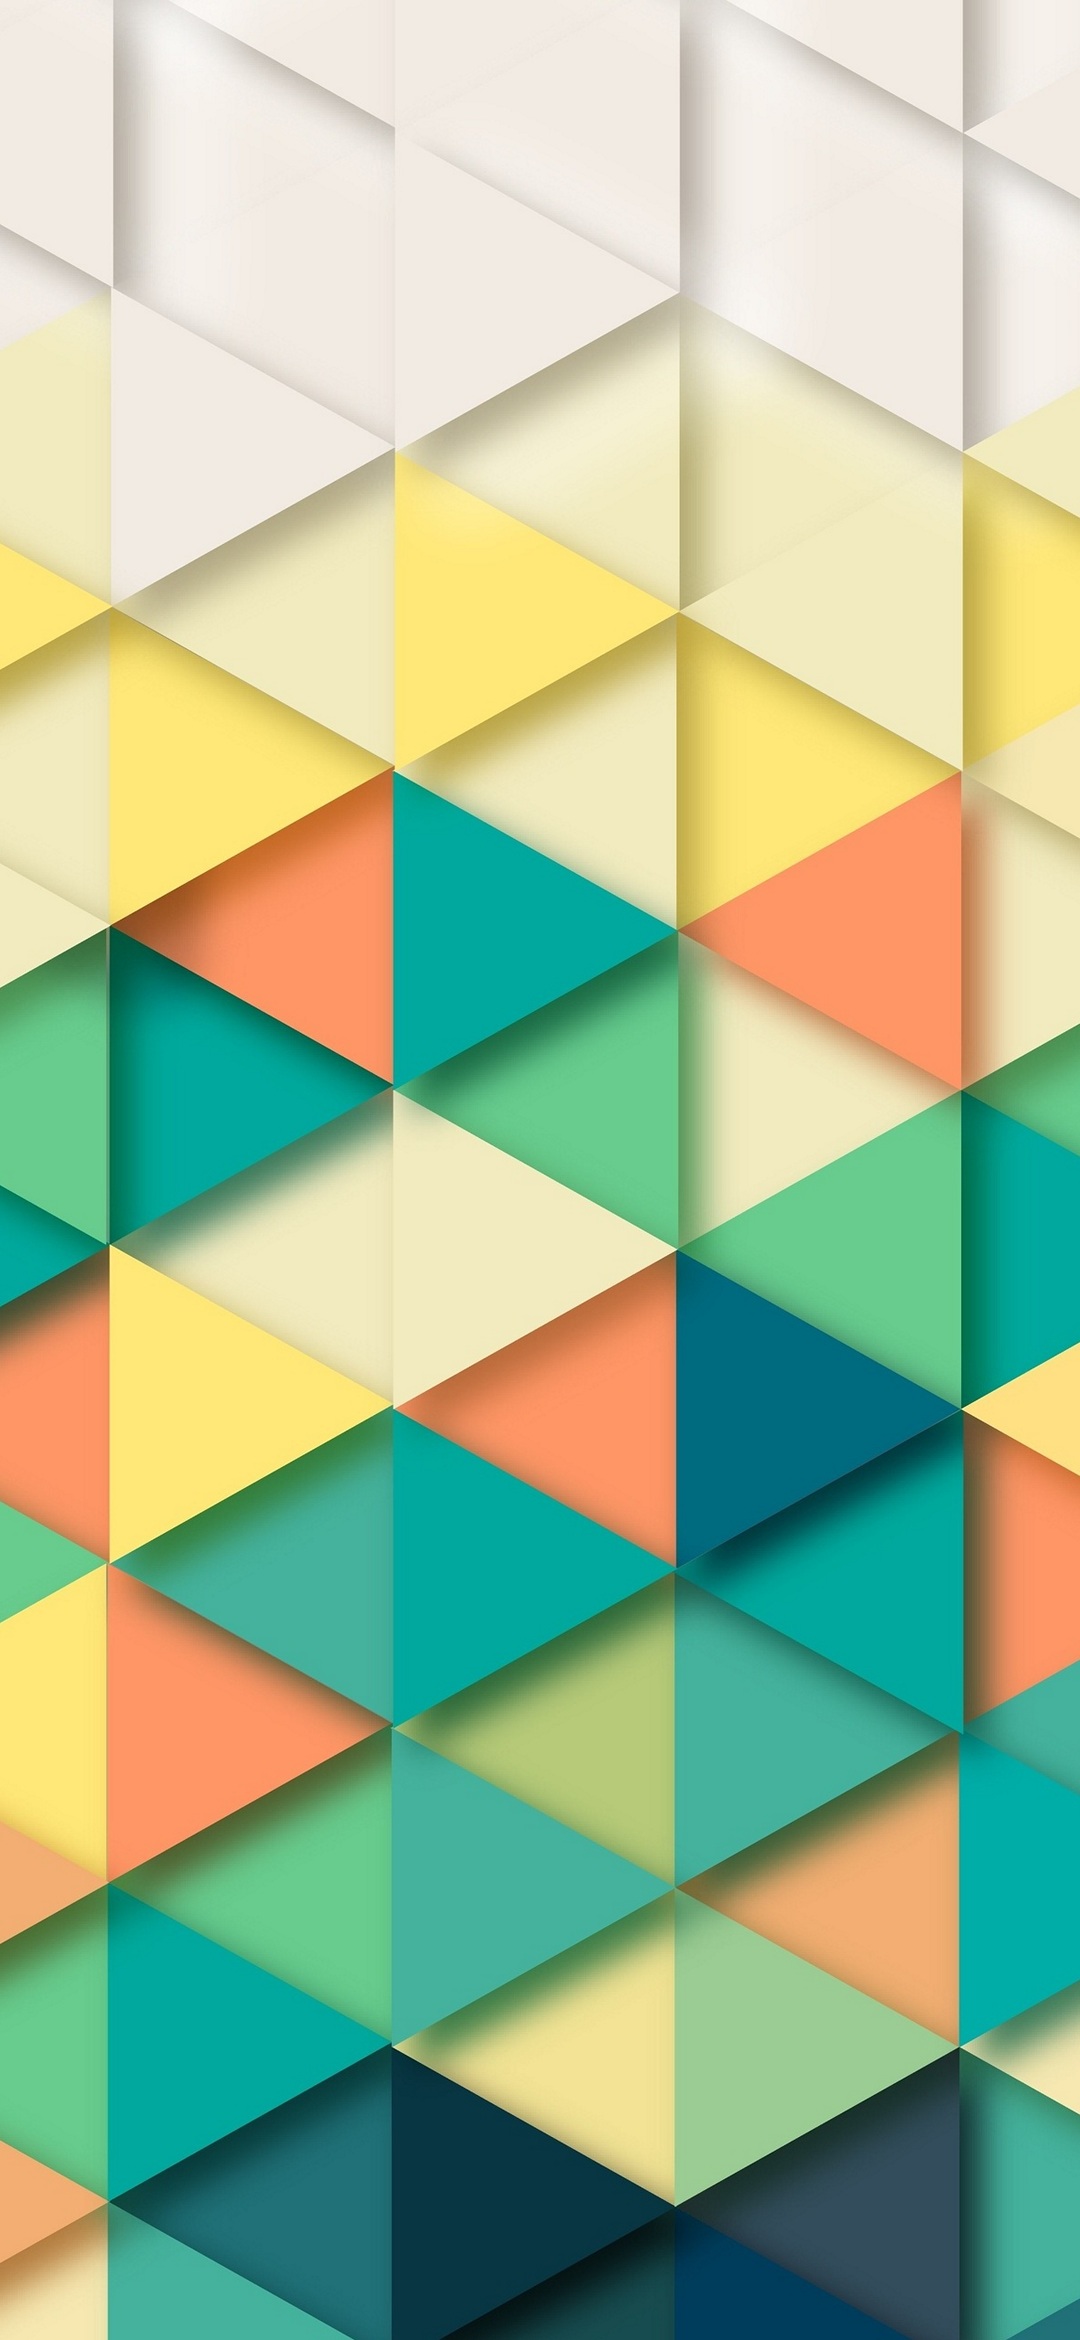 Light colored triangular polygon RedMagic 5 Android 壁紙・待ち受け